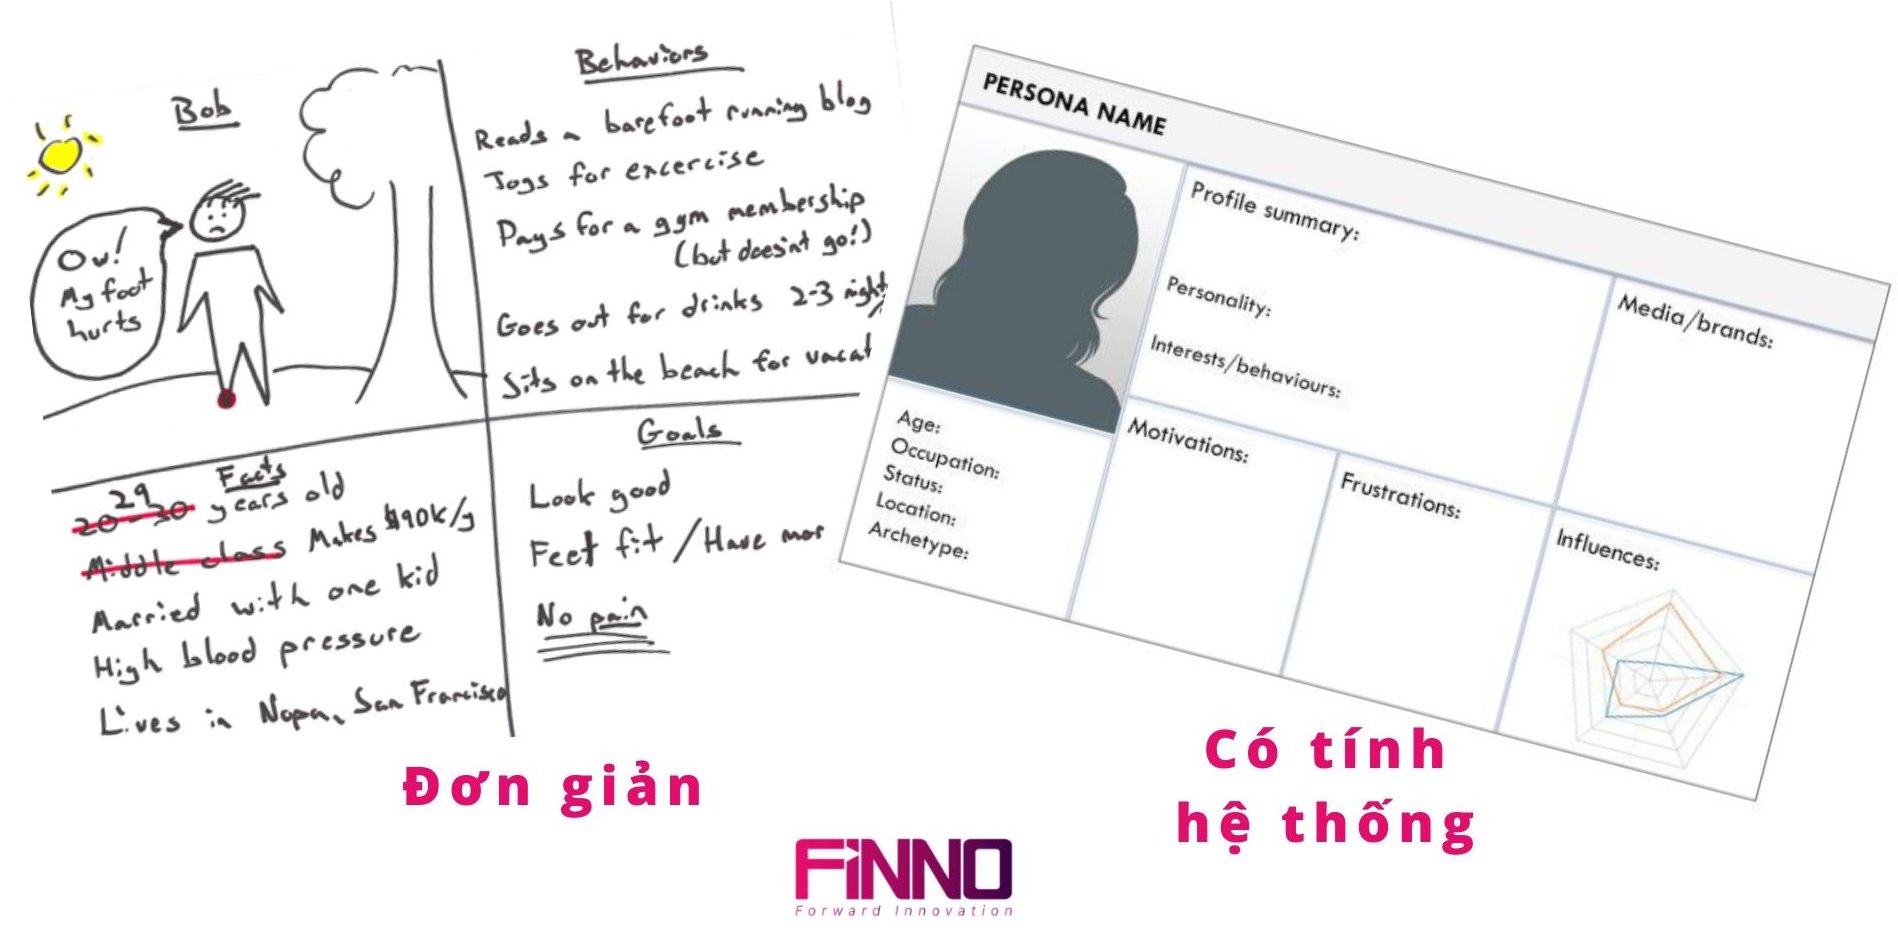 FiNNO - Another Customer Persona